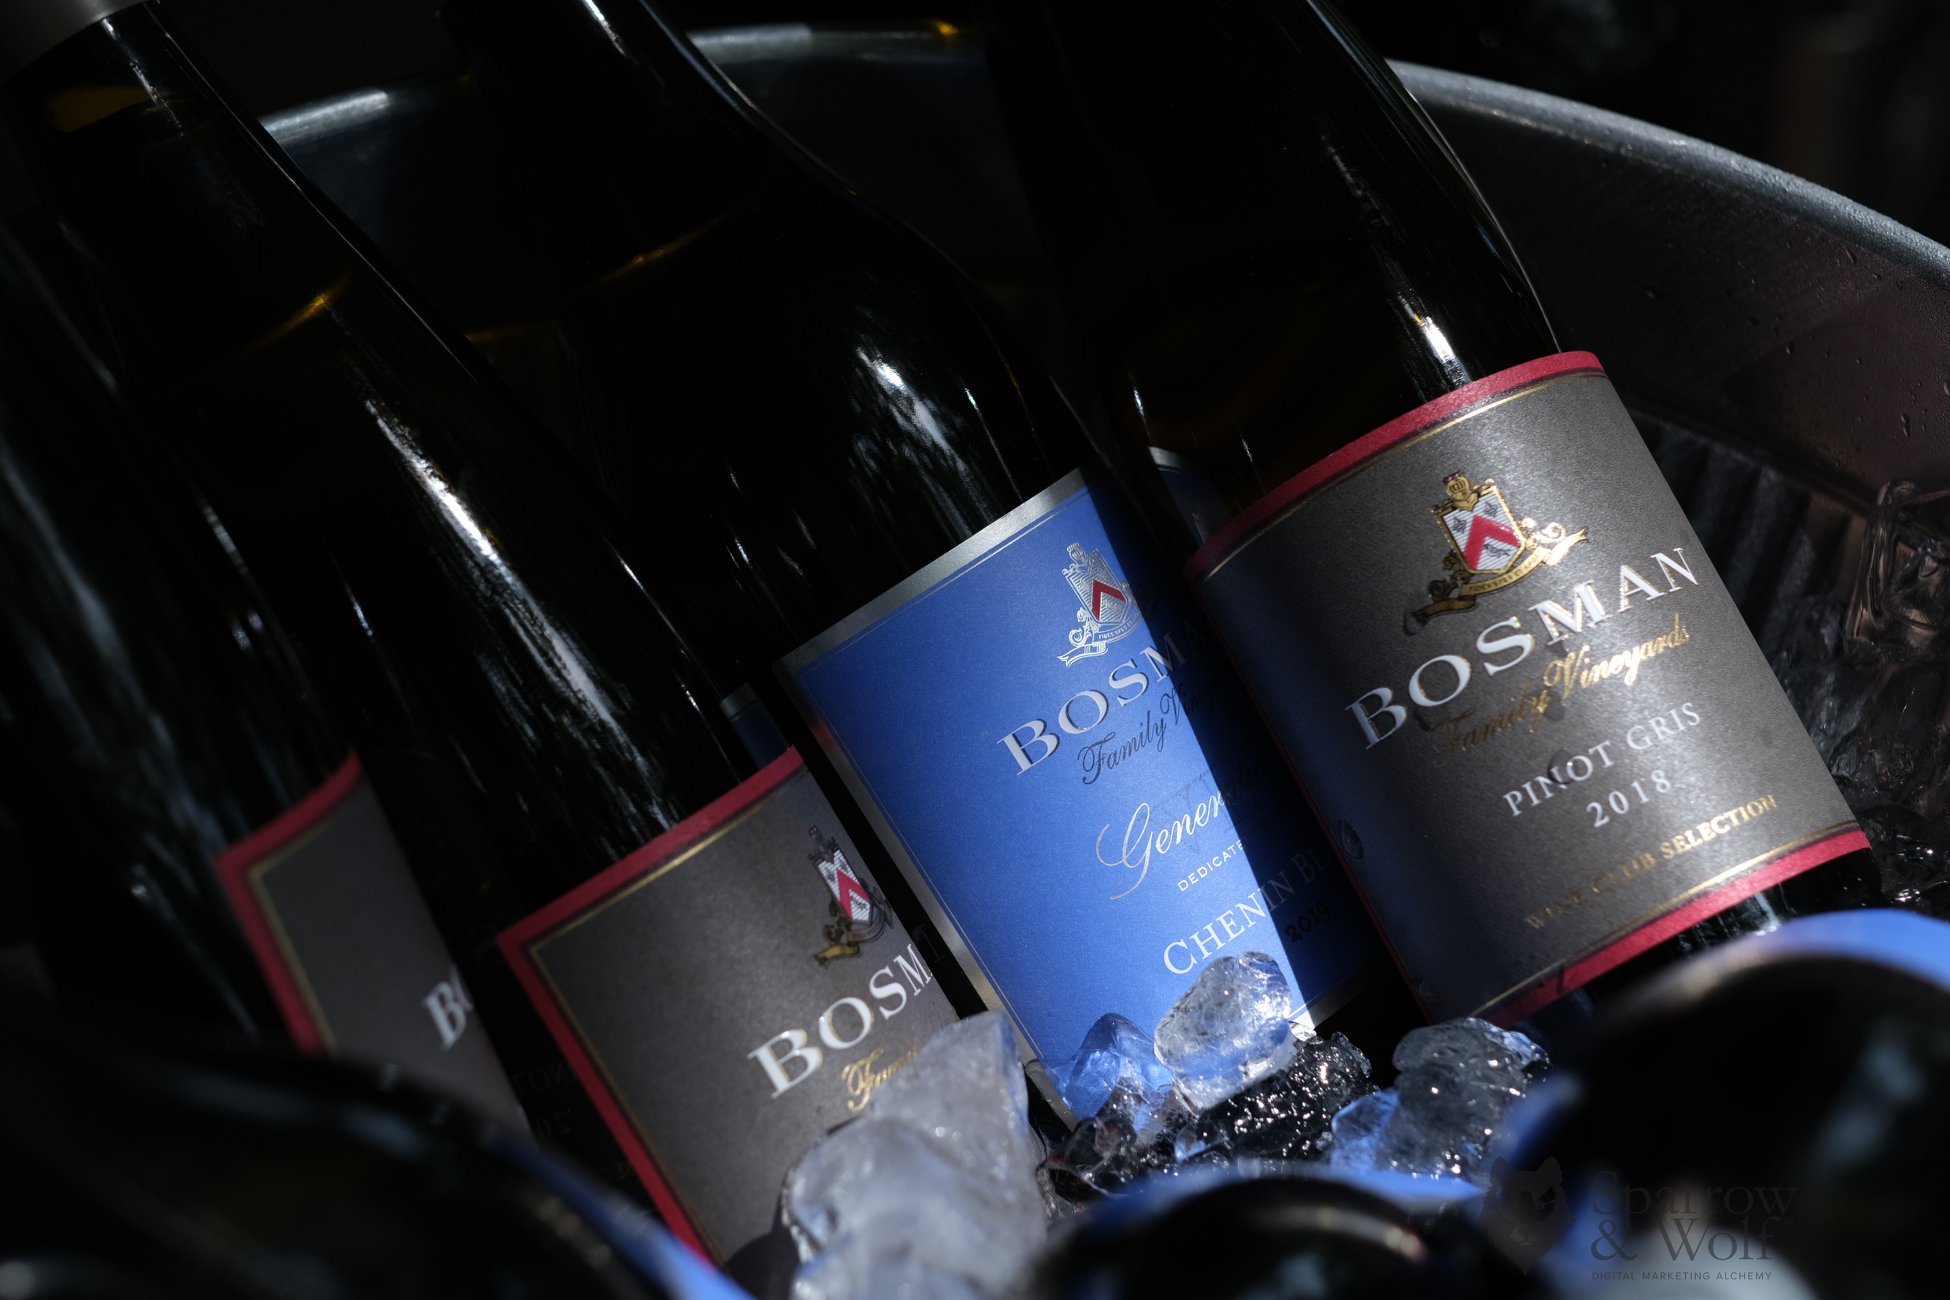 Bosman wines